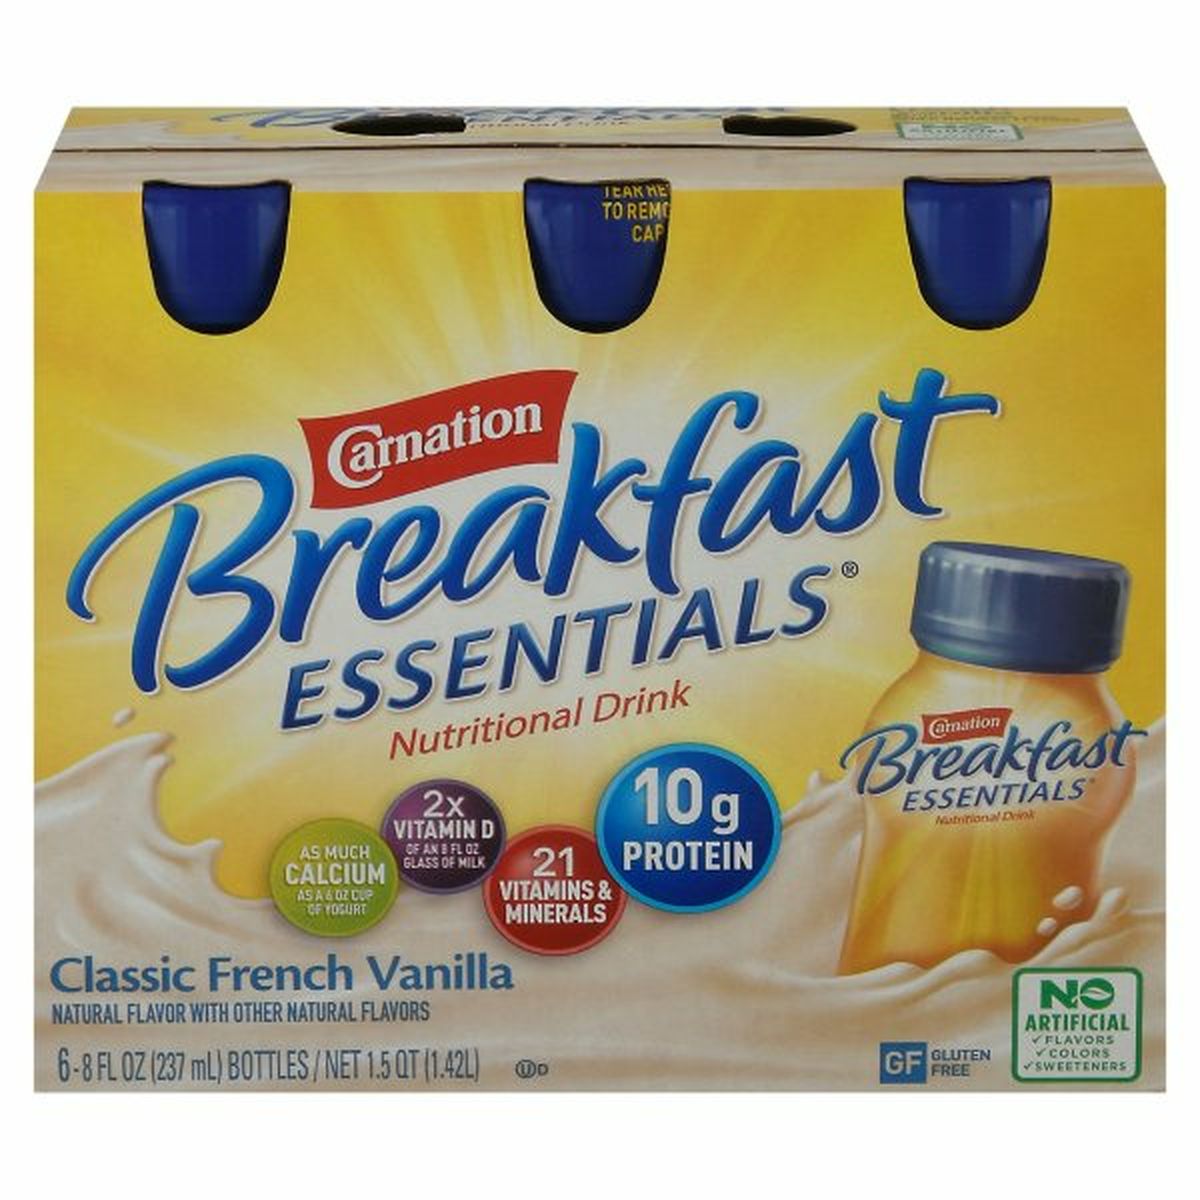 Calories in Carnation Breakfast Essentials Breakfast Essentials Nutritional Drink, Classic French Vanilla, 6 Pack